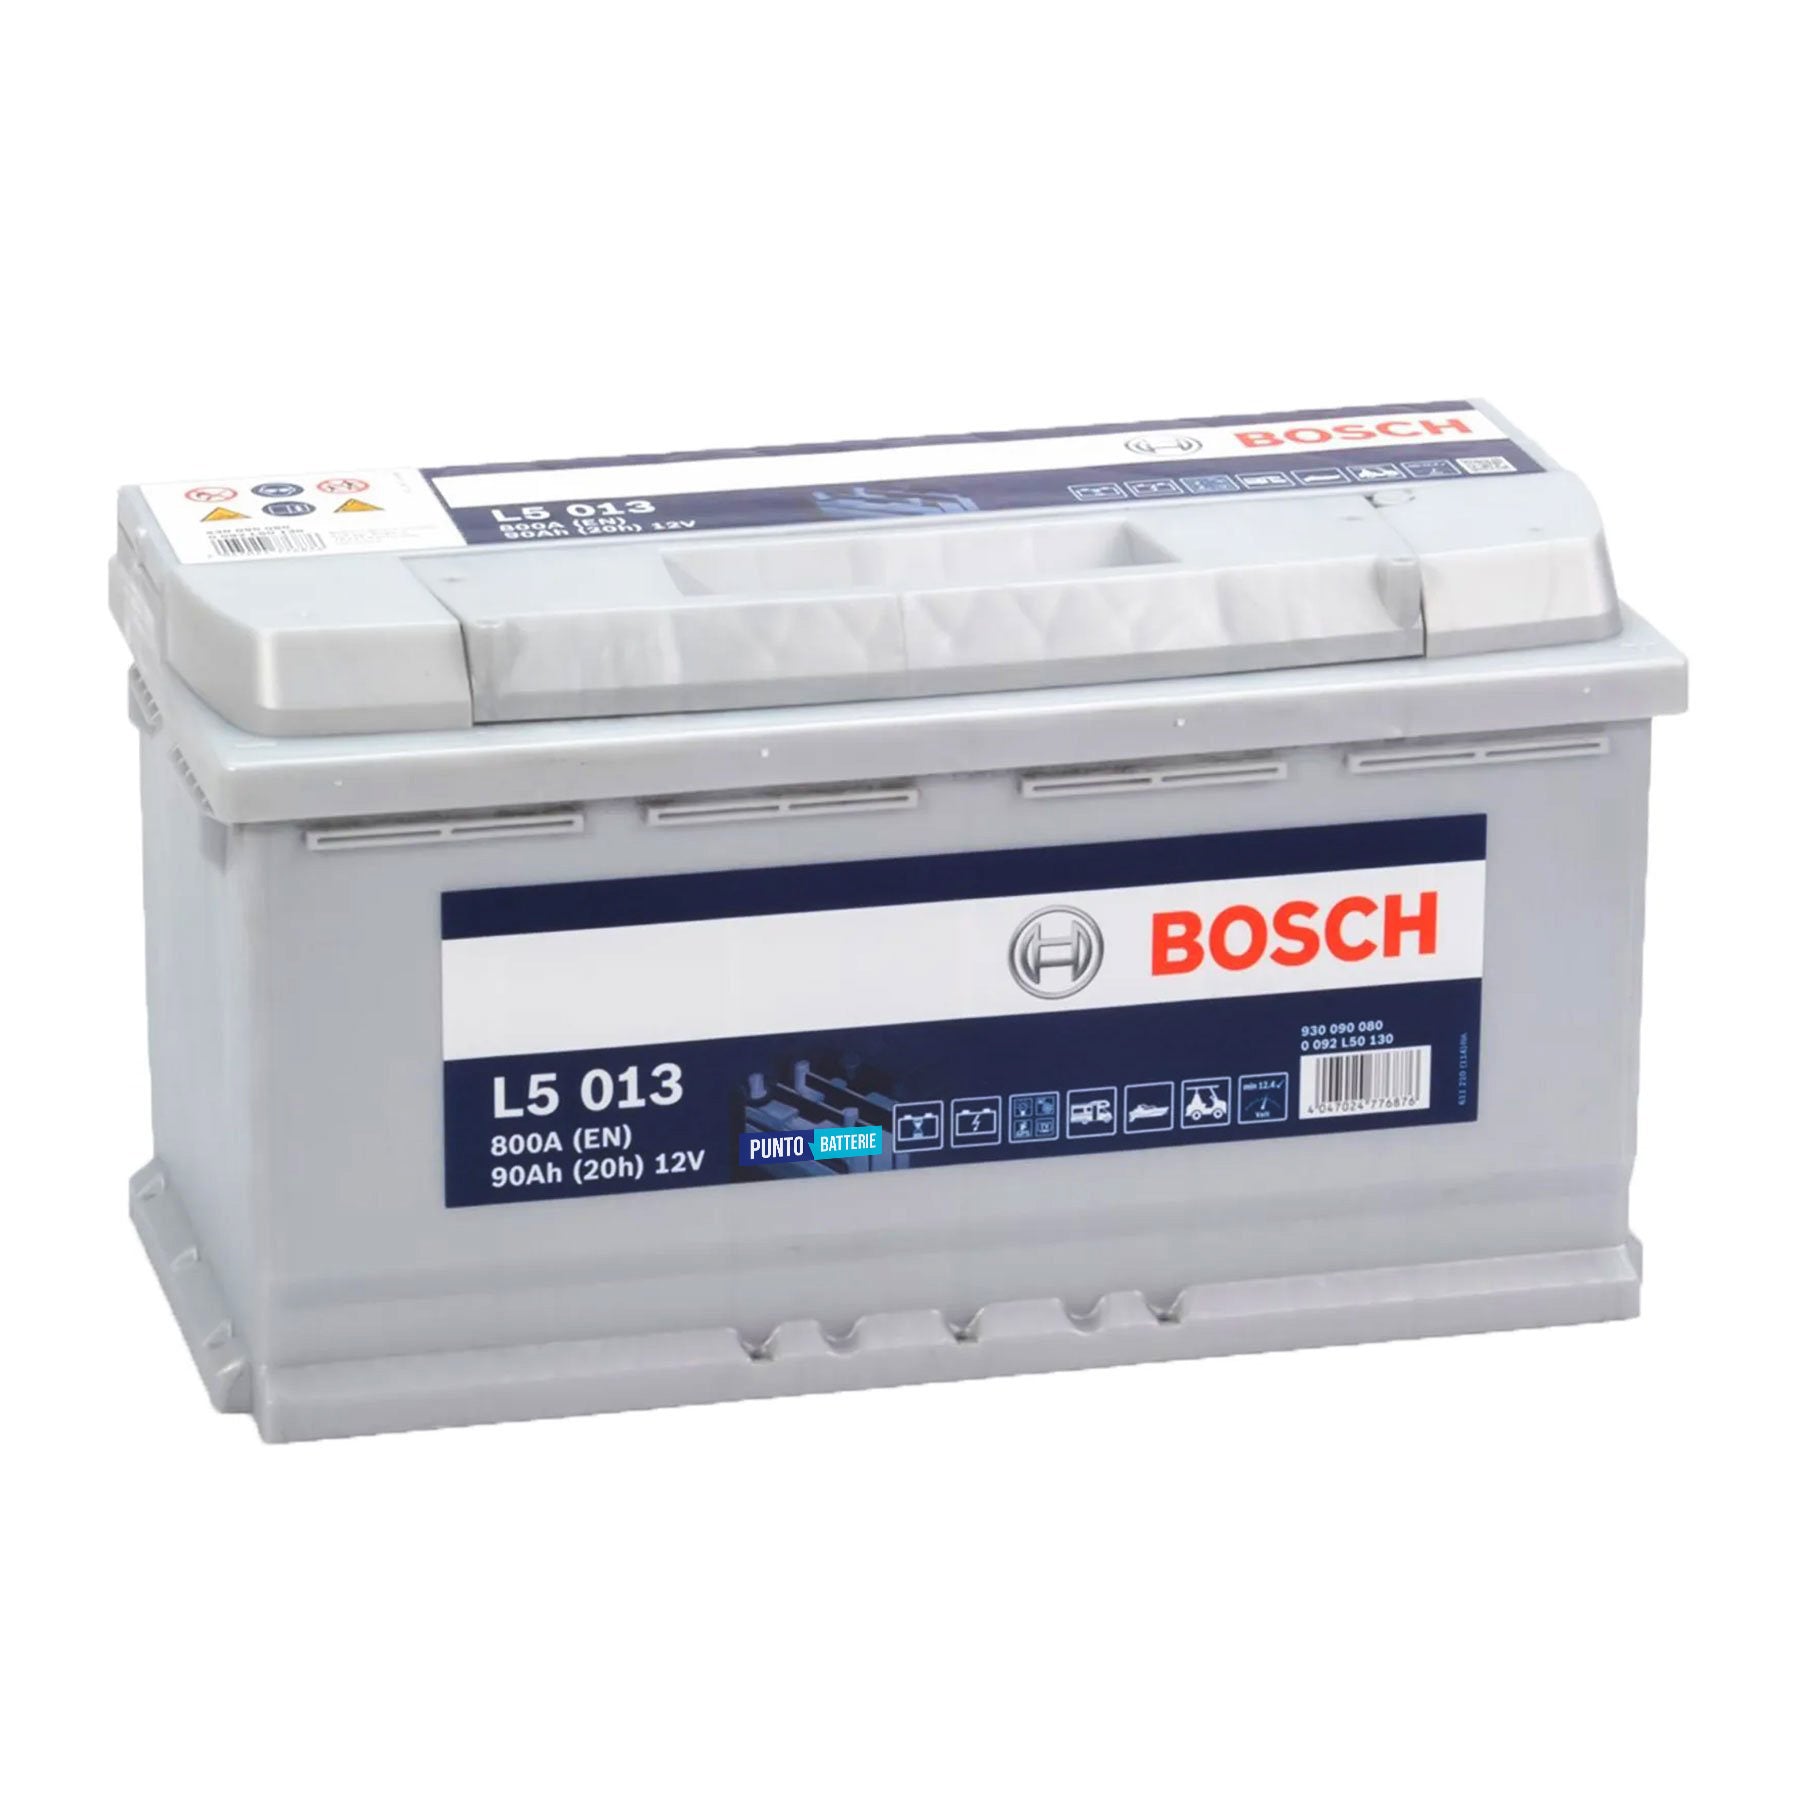 Batteria originale Bosch L5 L5 013, dimensioni 353 x 175 x 190, 12 volt, 90 amperora. Batteria per servizi di camper, barca e applicazioni a scarica lenta.